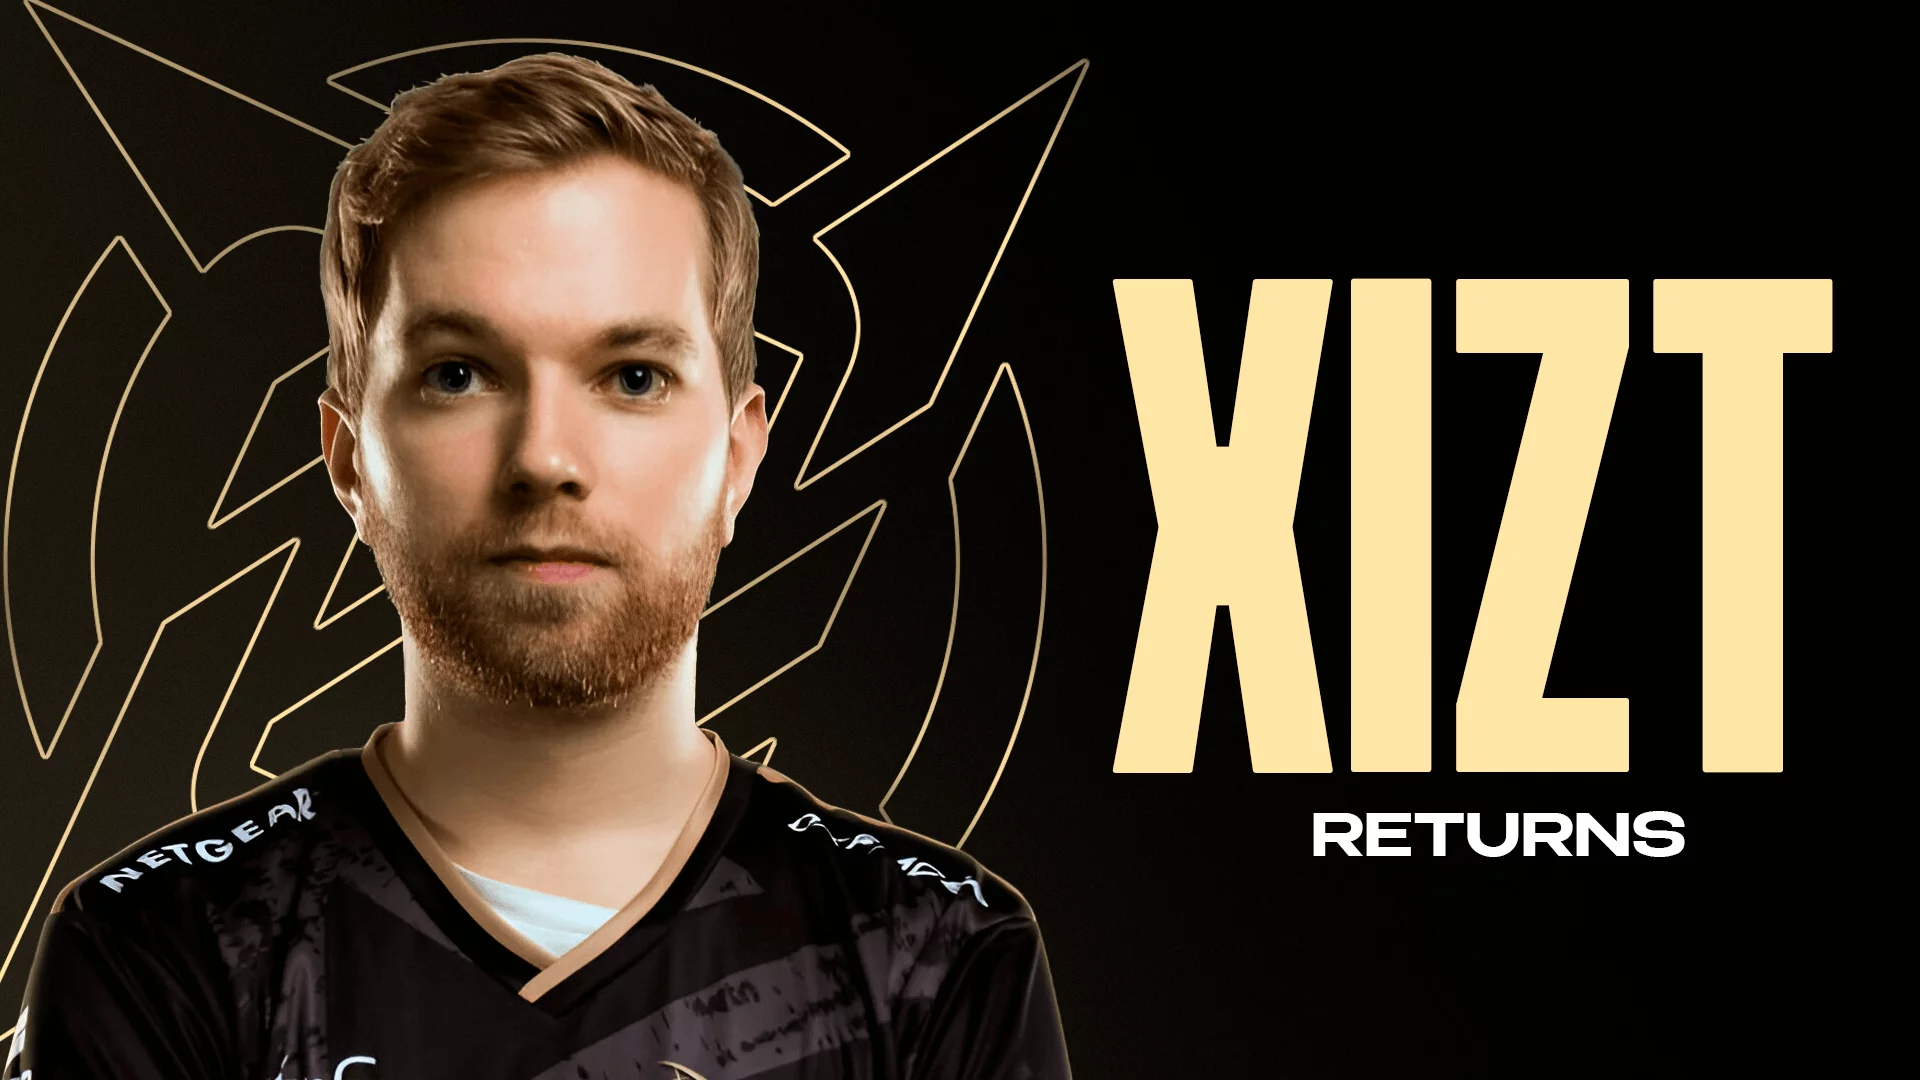 XIZT returns